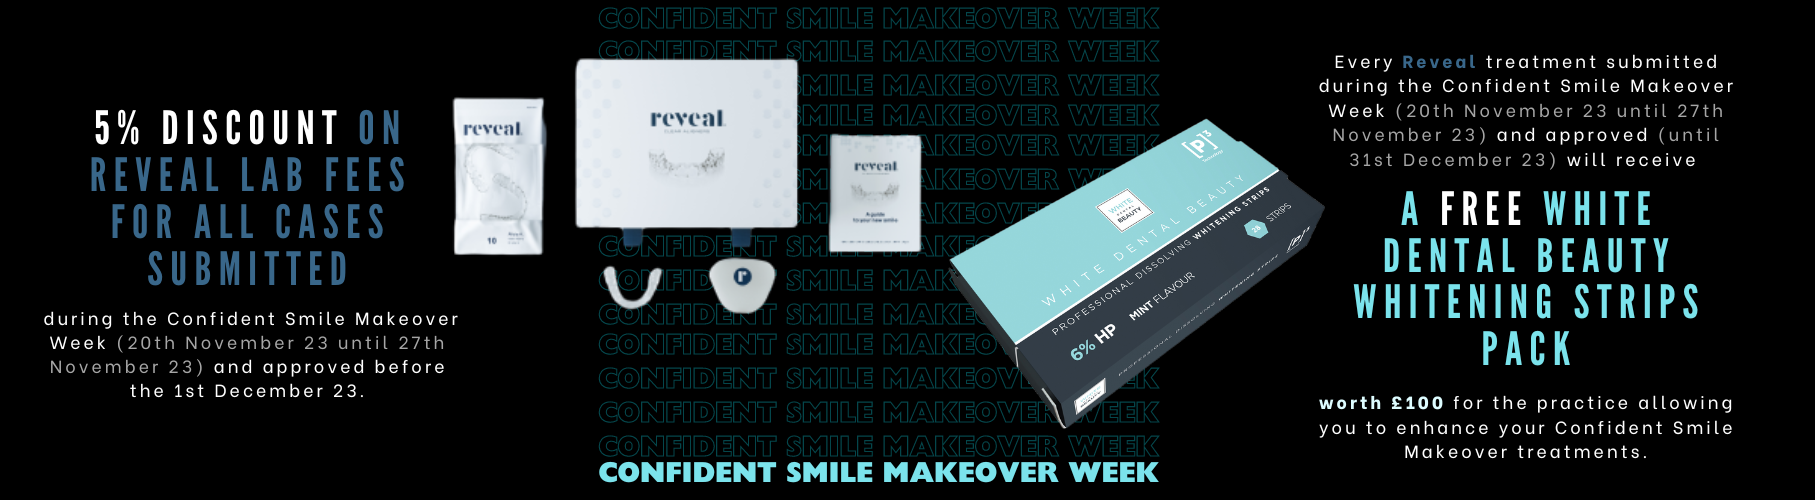 Confident smile makeover week